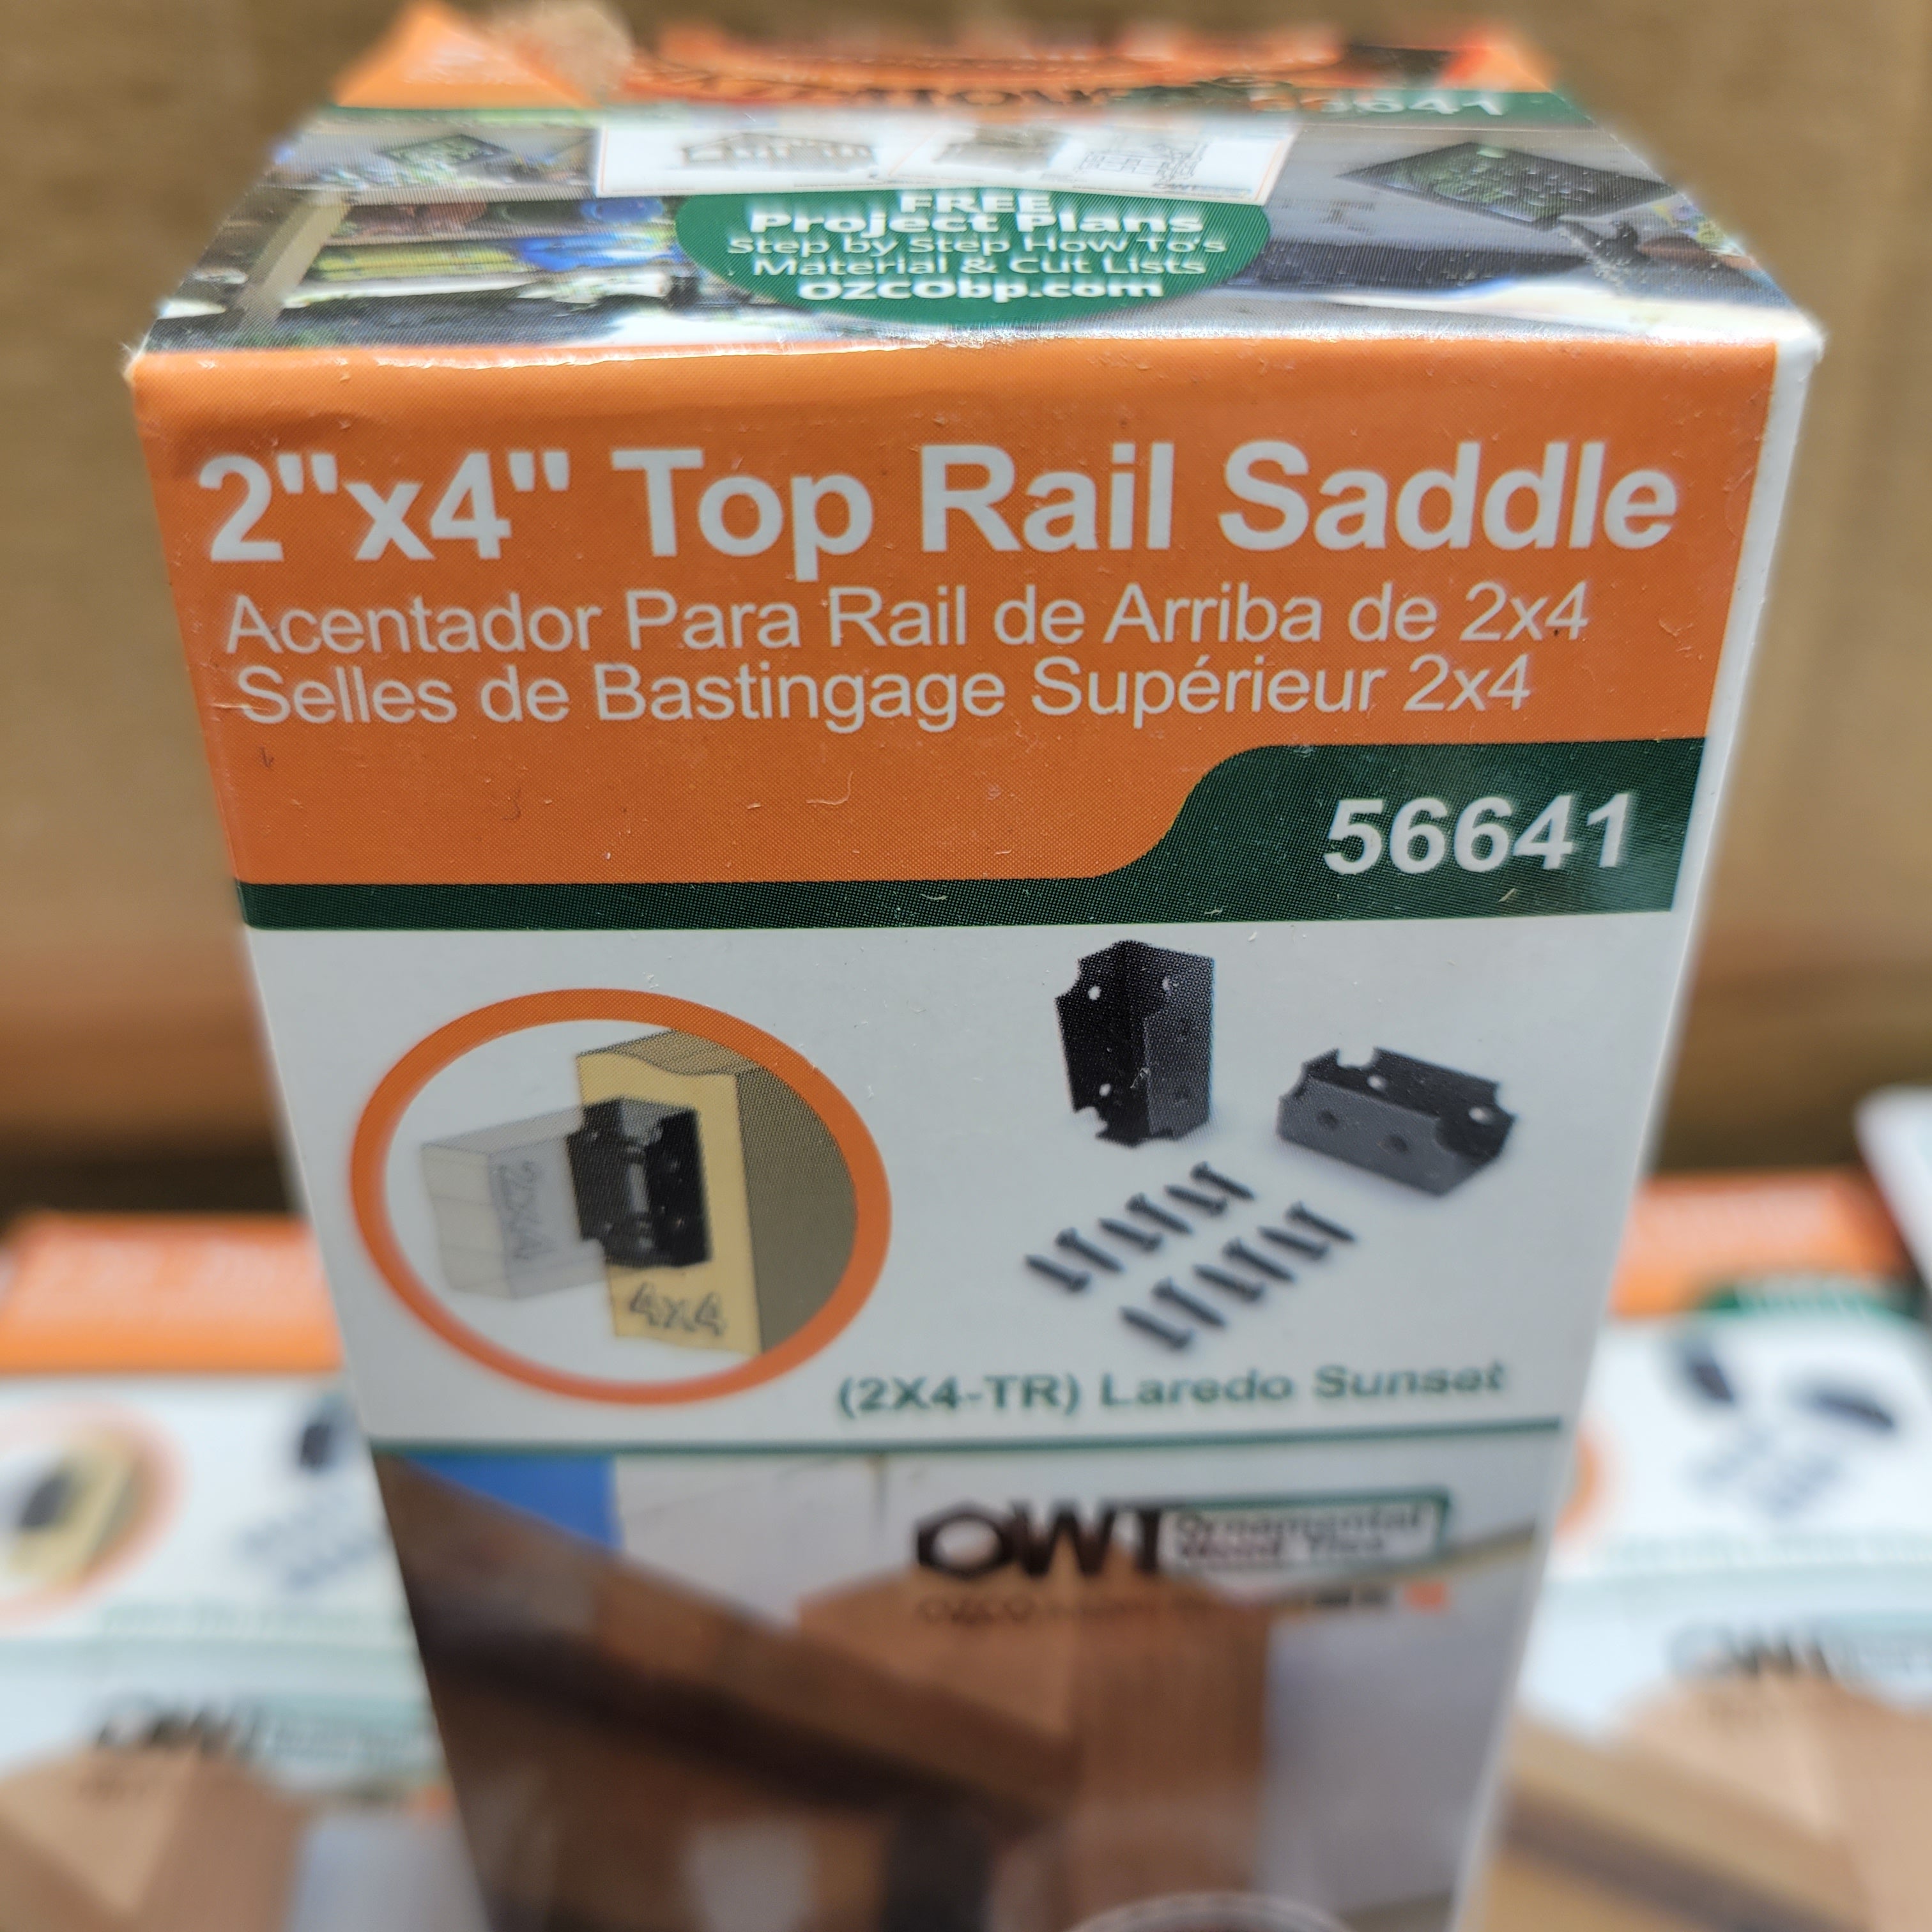 (Lot of 23 Packs) OZCO 56641 Laredo Sunset 2x4 Top Rail Saddle, (2 per Pack) (7712462995694)